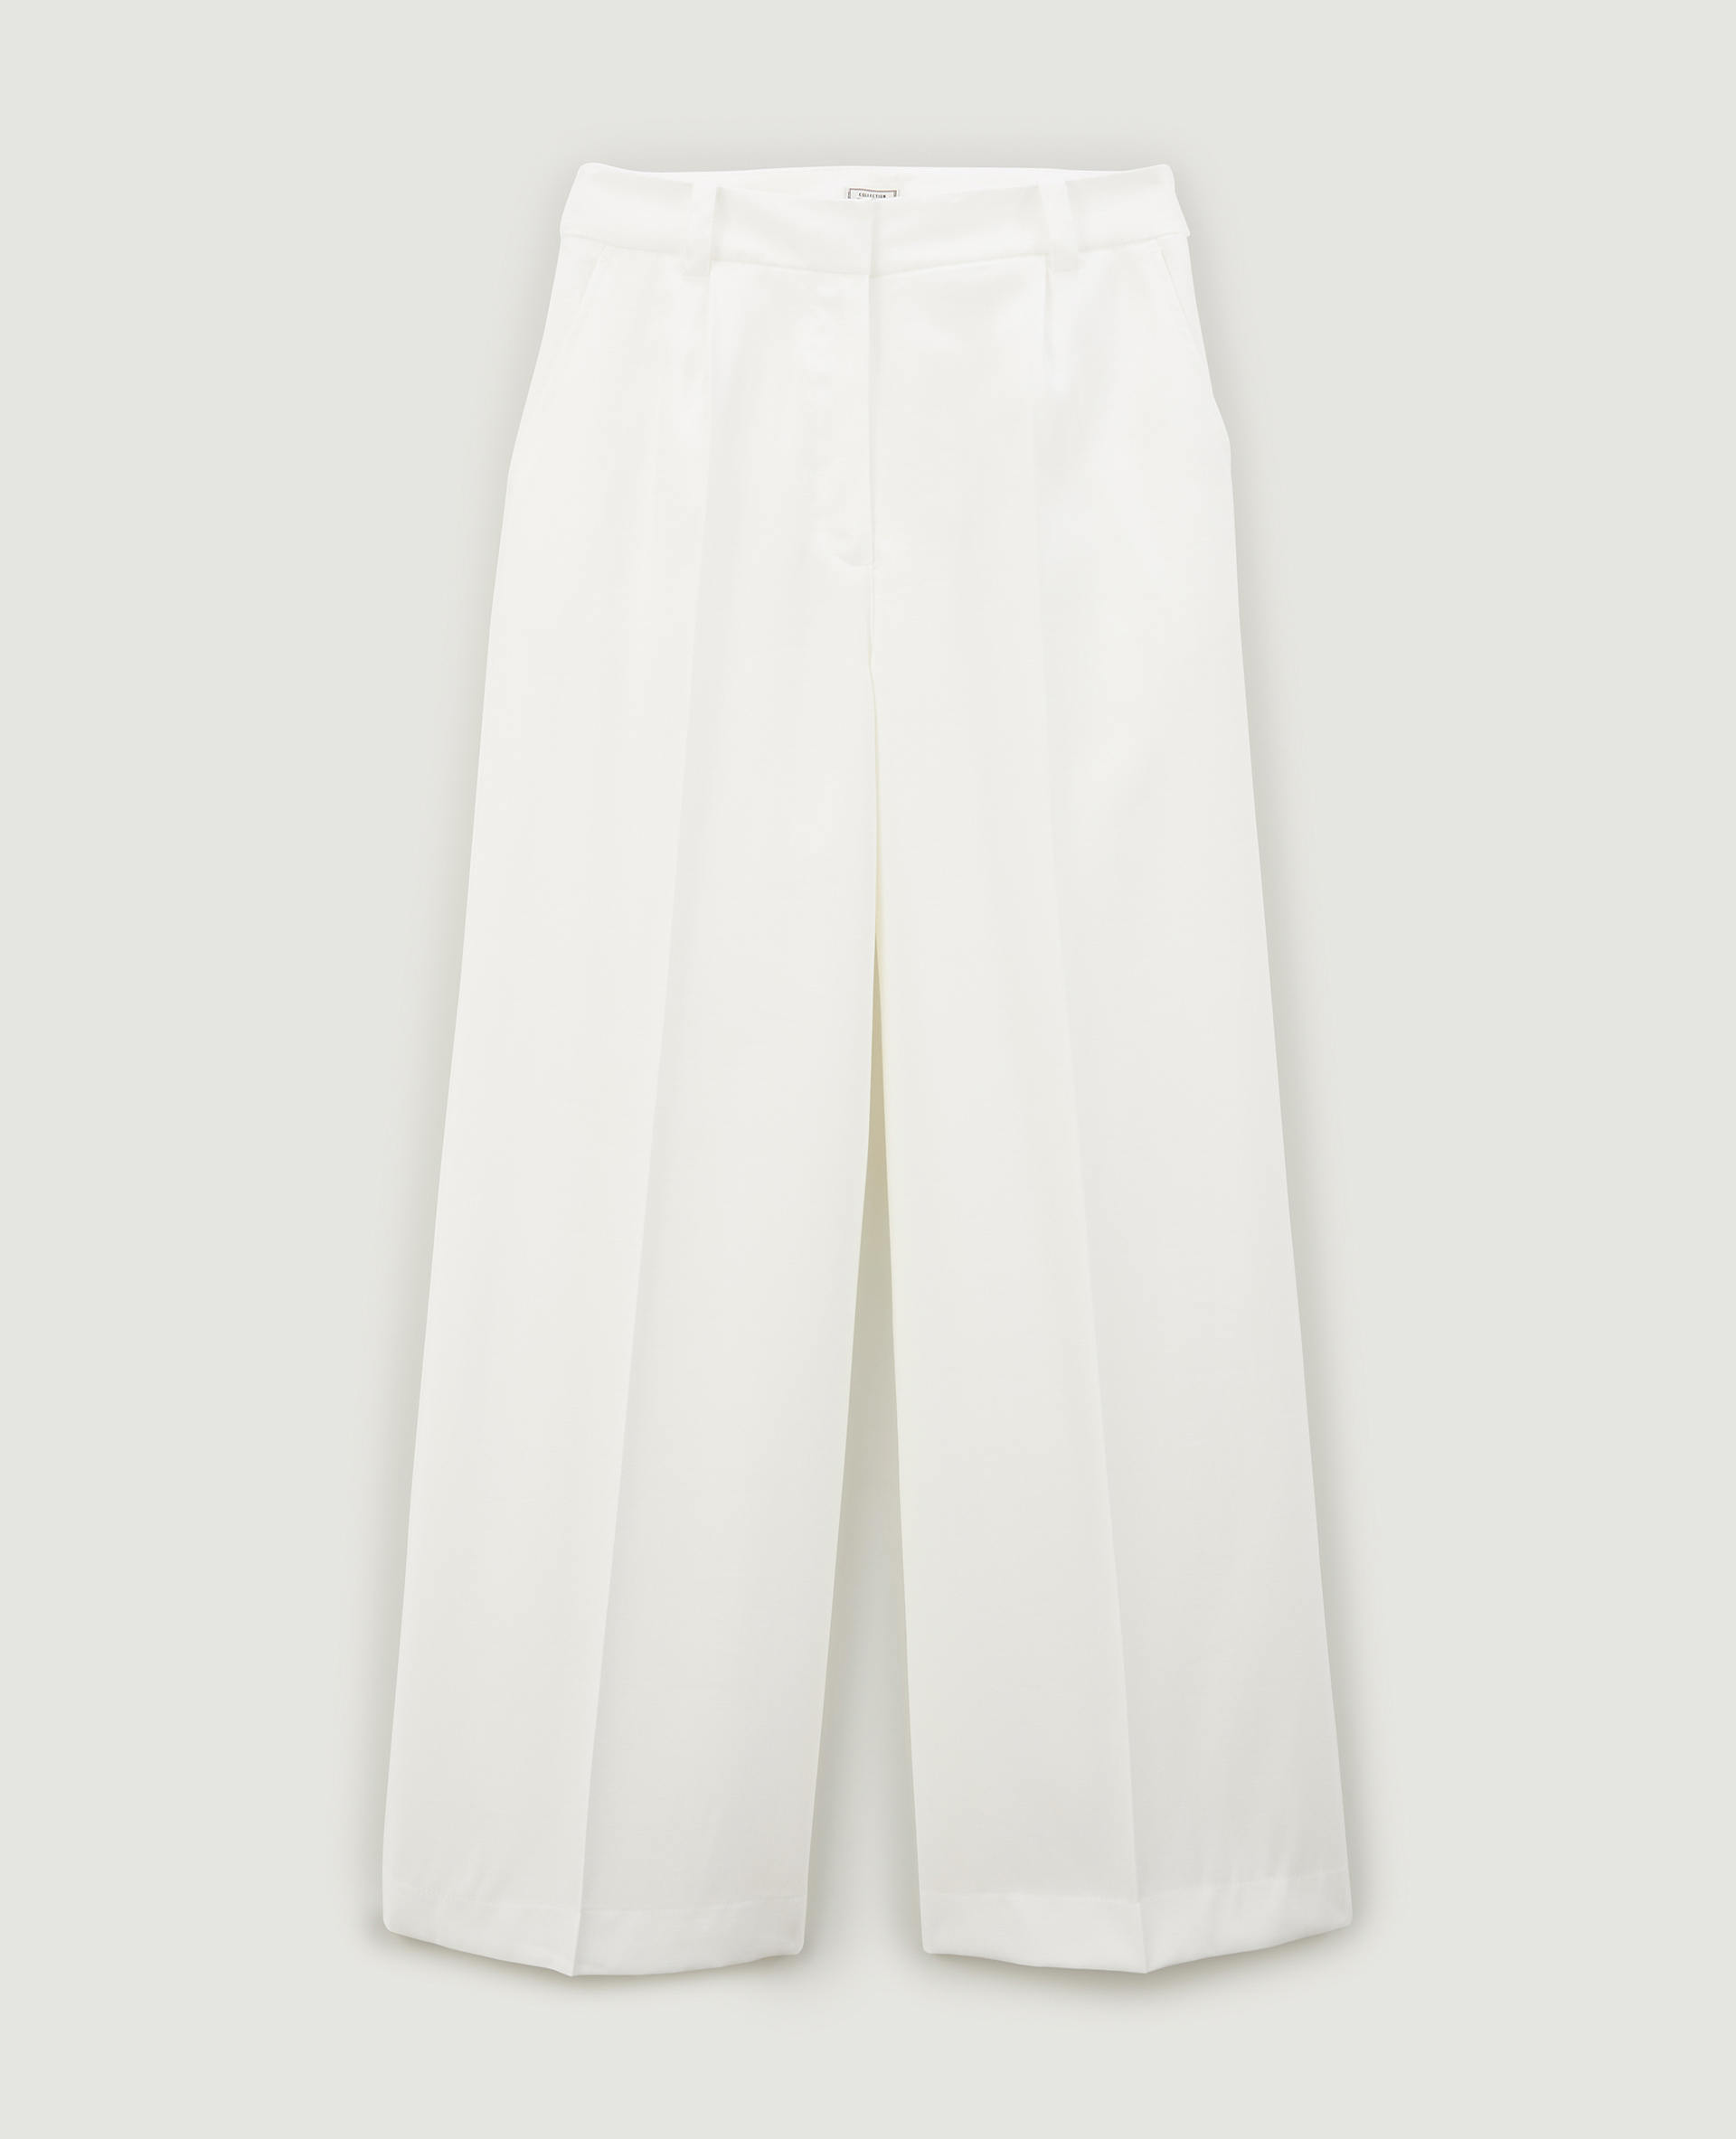 Mode Pantalons Pantalons taille haute Twinners Pantalon taille haute blanc cass\u00e9 style d\u00e9contract\u00e9 